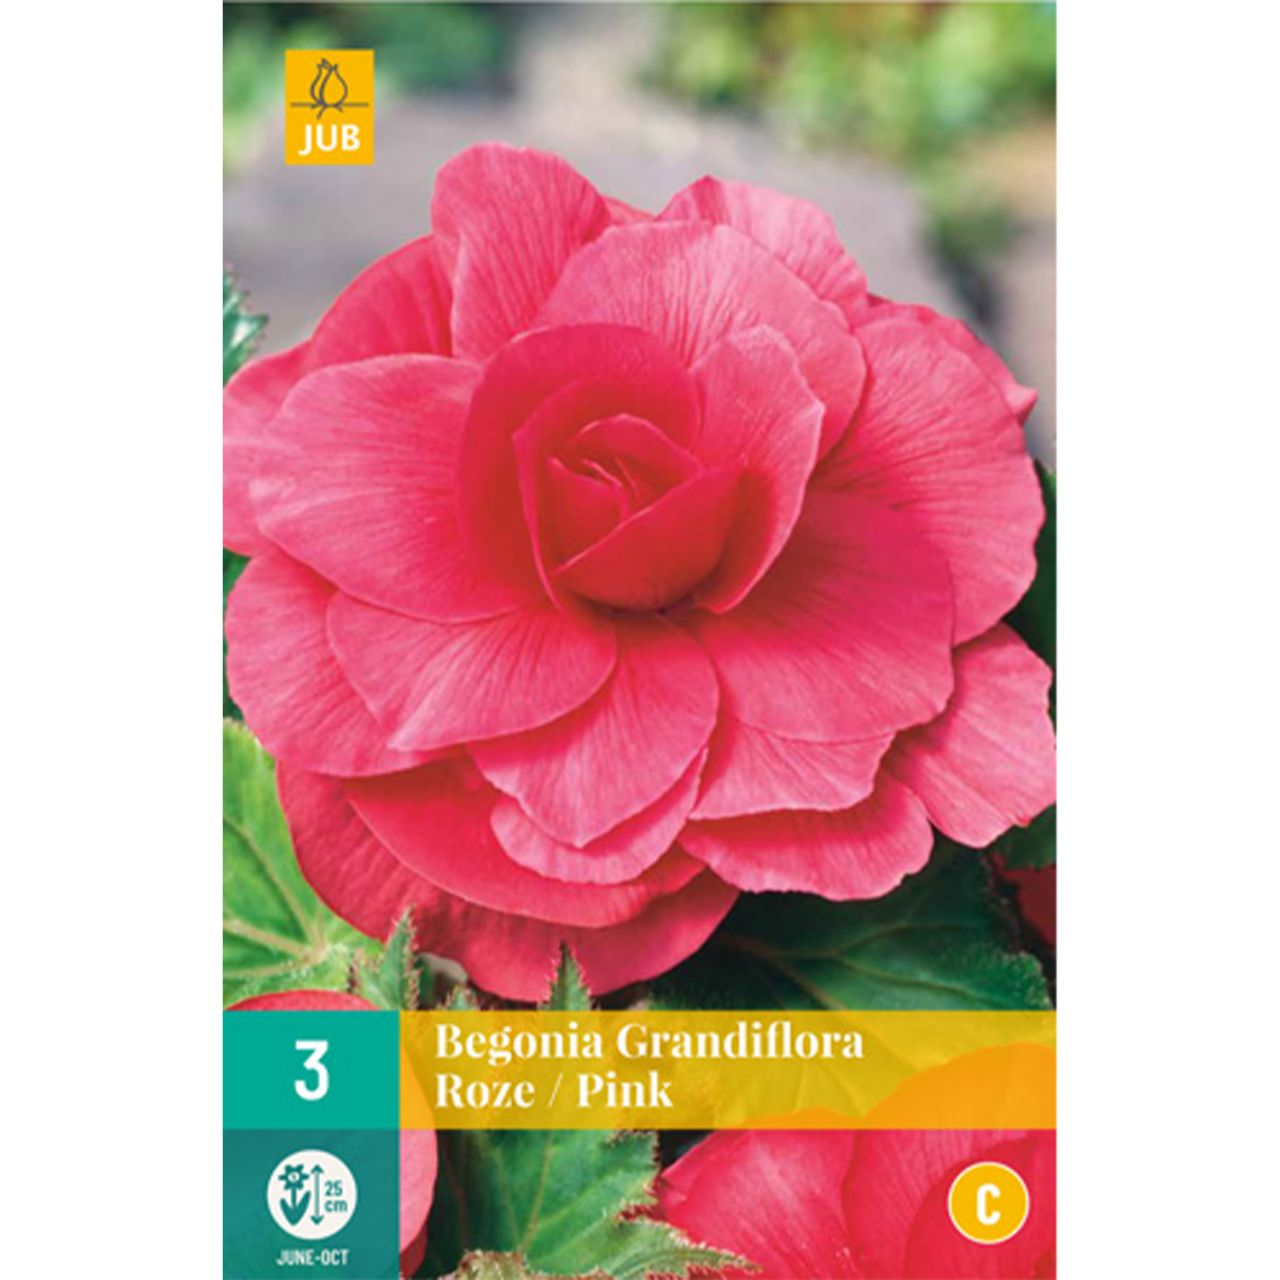 Kategorie <b>Frühlings-Blumenzwiebeln </b> - Riesenblütige Begonie 'Grandiflora Rosa' - 3 Stück - Begonia Grandiflora